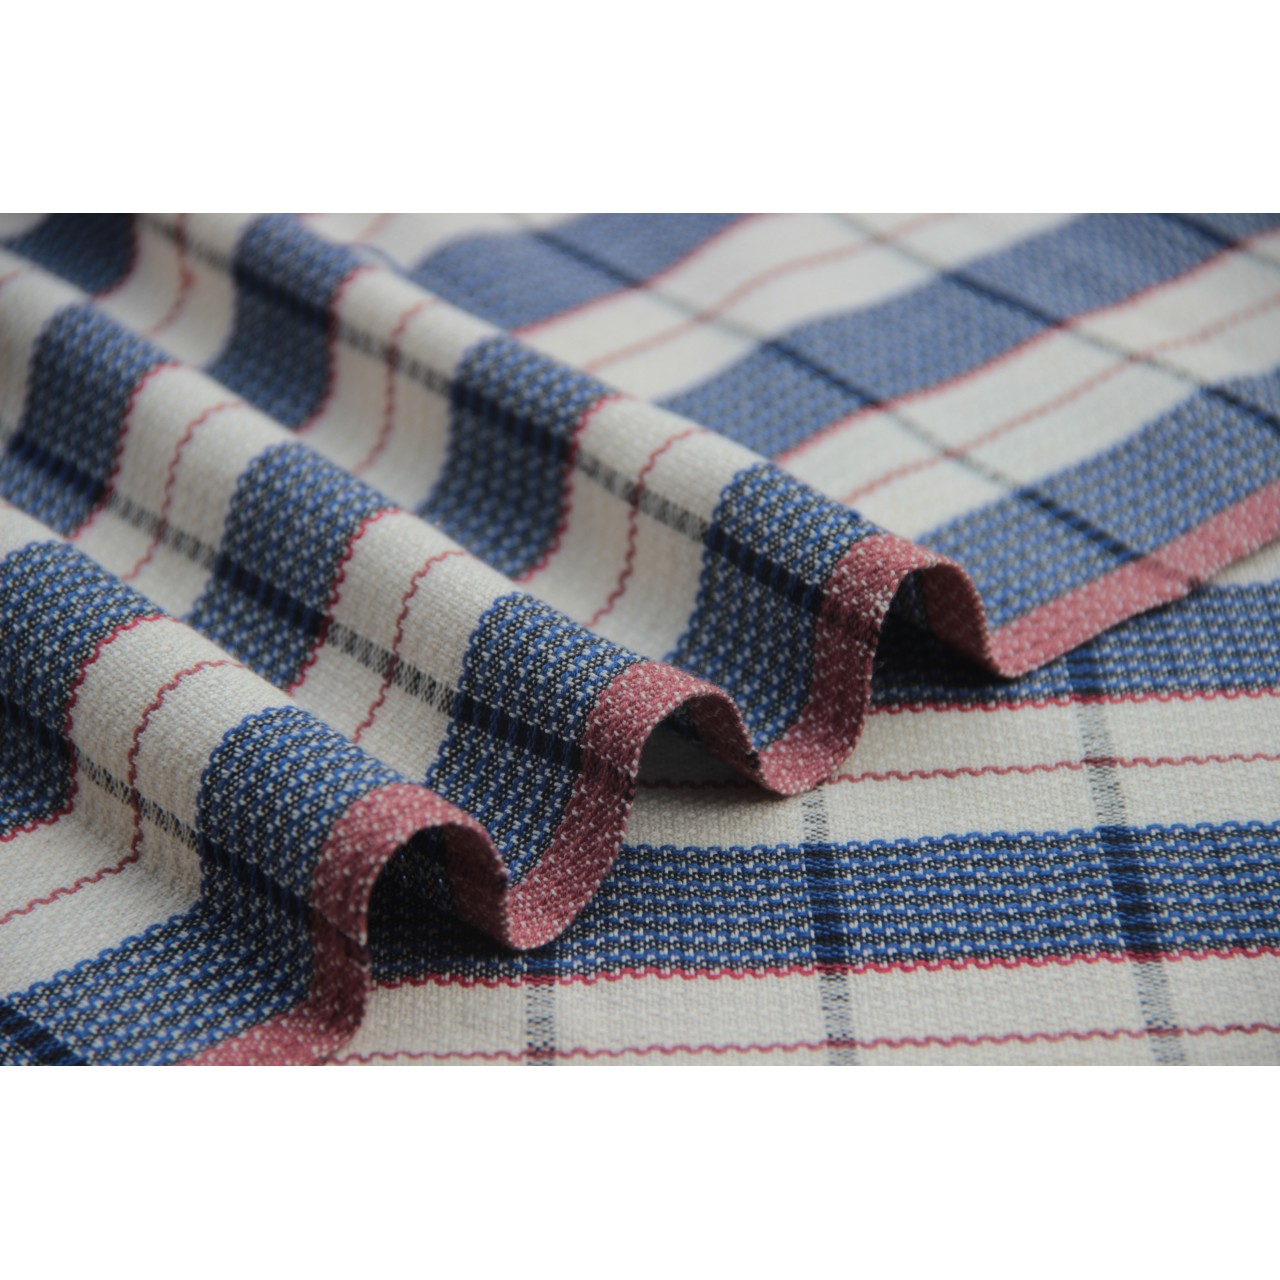 (137) Cotton Azo free dyed yardage from Kutch - Ivory, black, royal blue, checks, horizontal stripes, vertical stripes